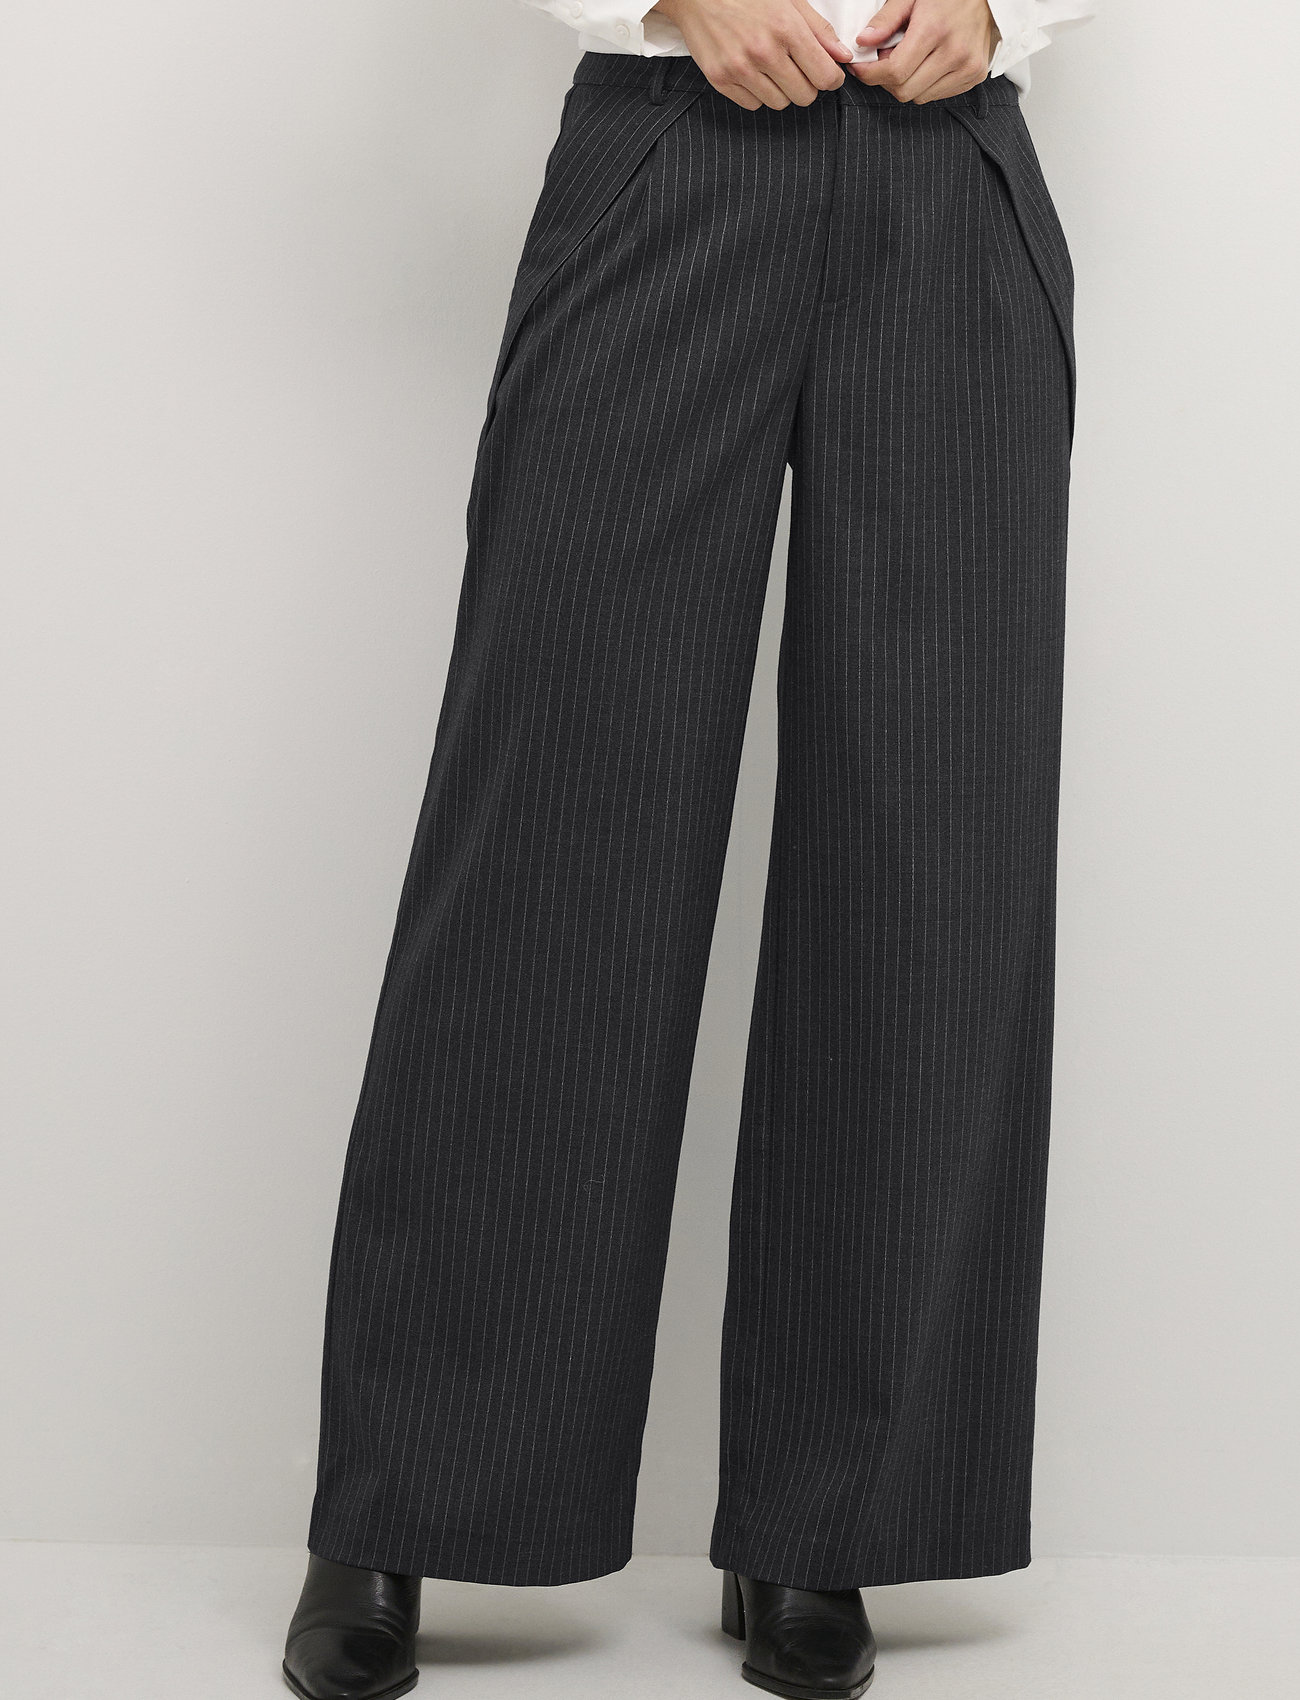 Culture - CUachena Pants - spodnie proste - dark grey melange - 1